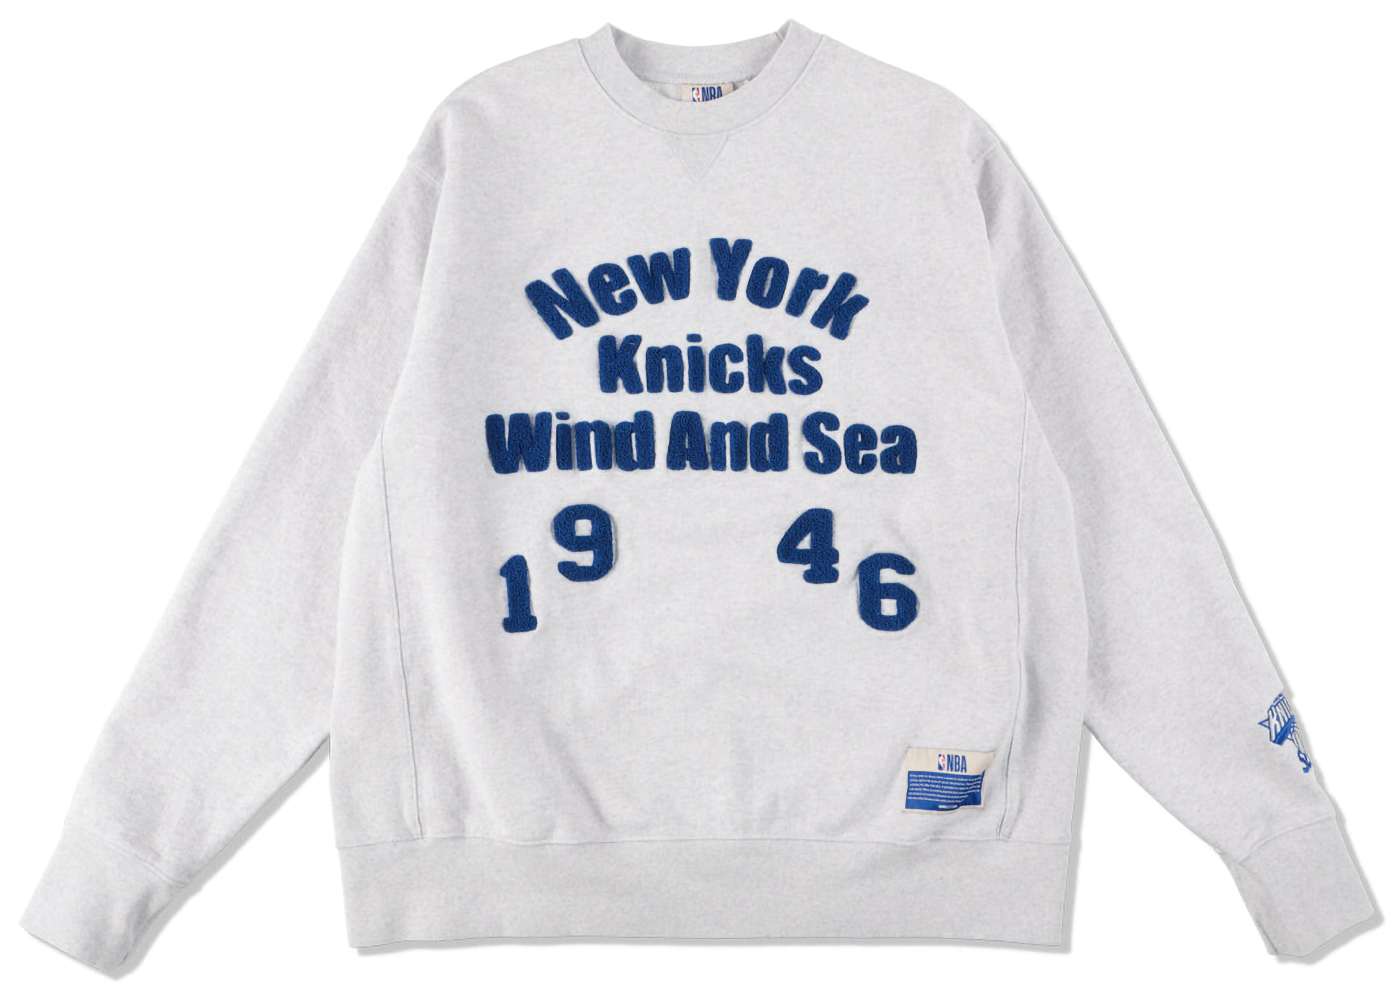 Wind and Sea x NBA NY Knicks Crew Neck | labiela.com